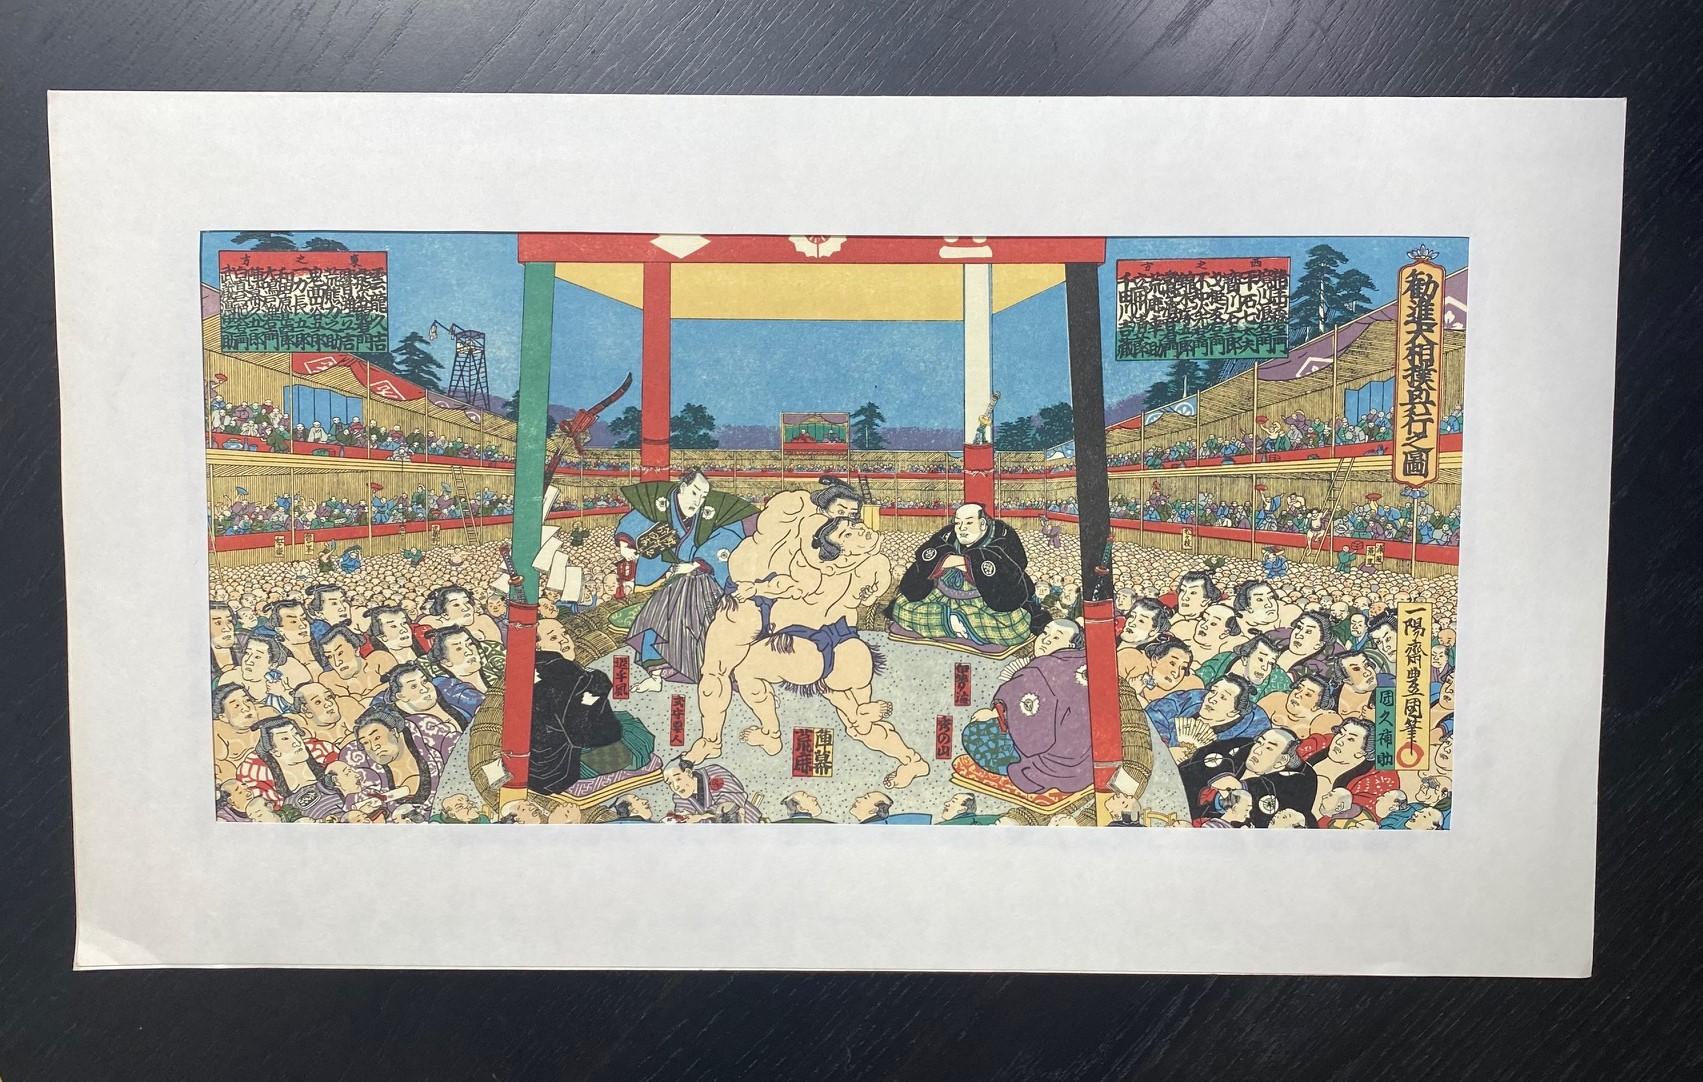 A beautifully composed and richly colored woodblock print by renowned Japanese artist Tokoyuni III (AKA Utagawa Kunisada 1786-1864 and here referred to as 